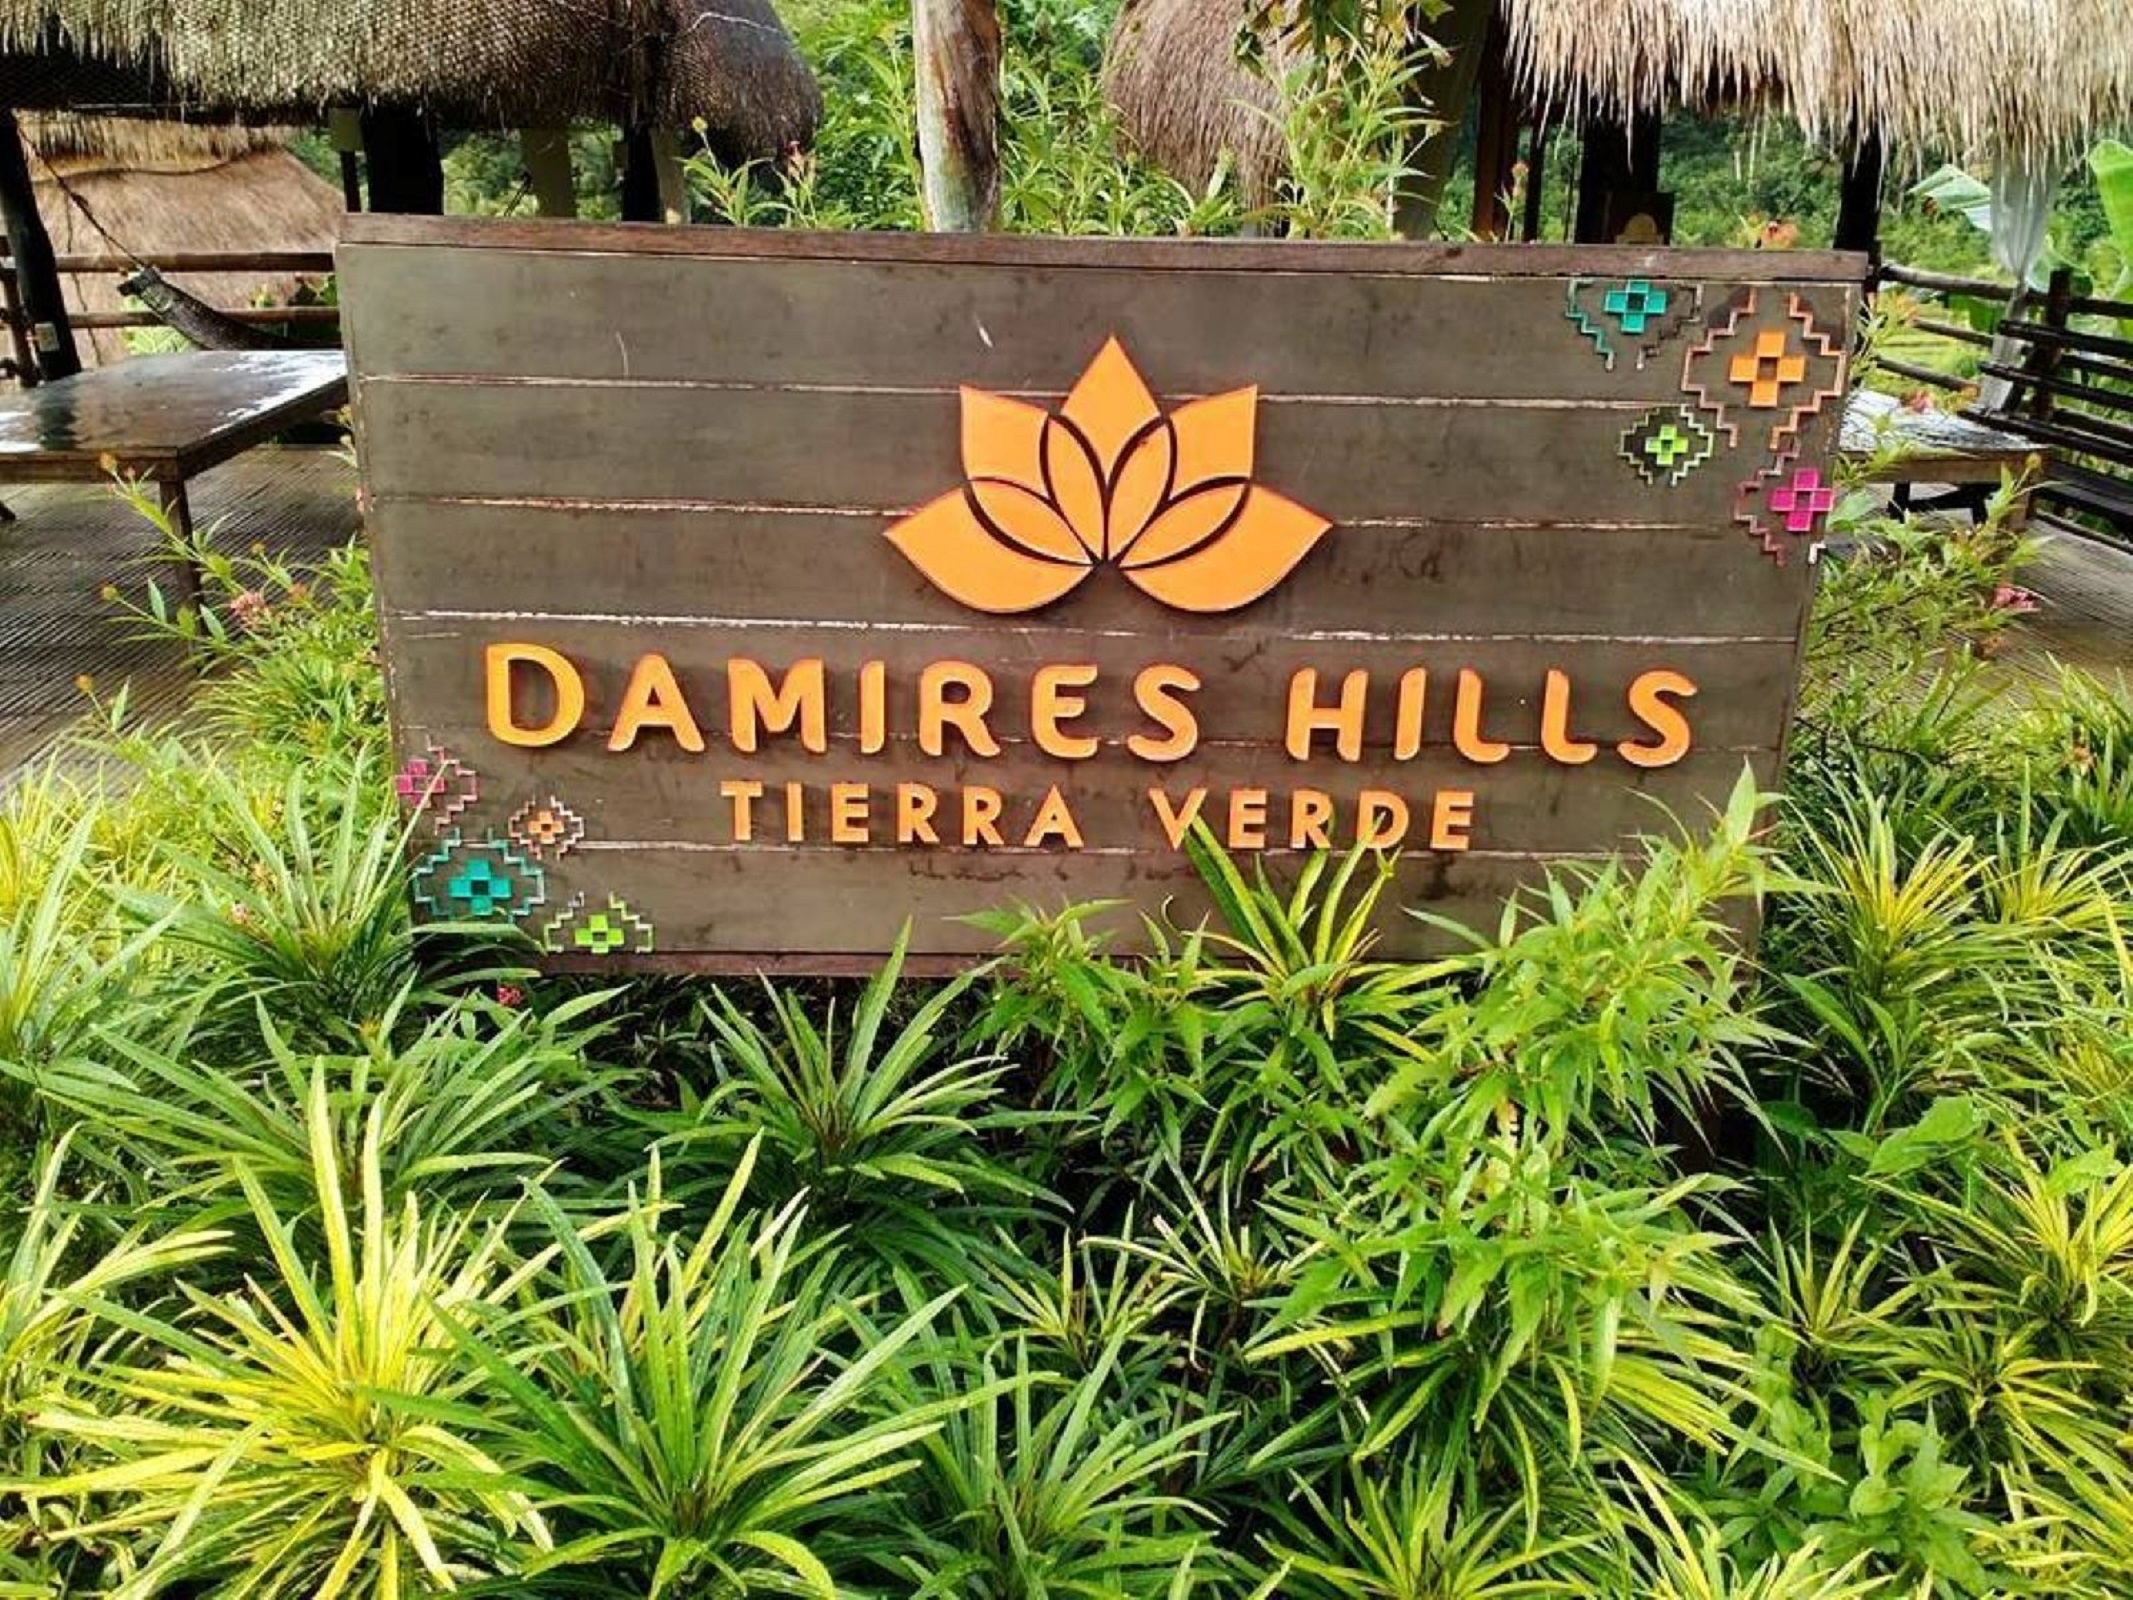 Damires Hills in Iloilo